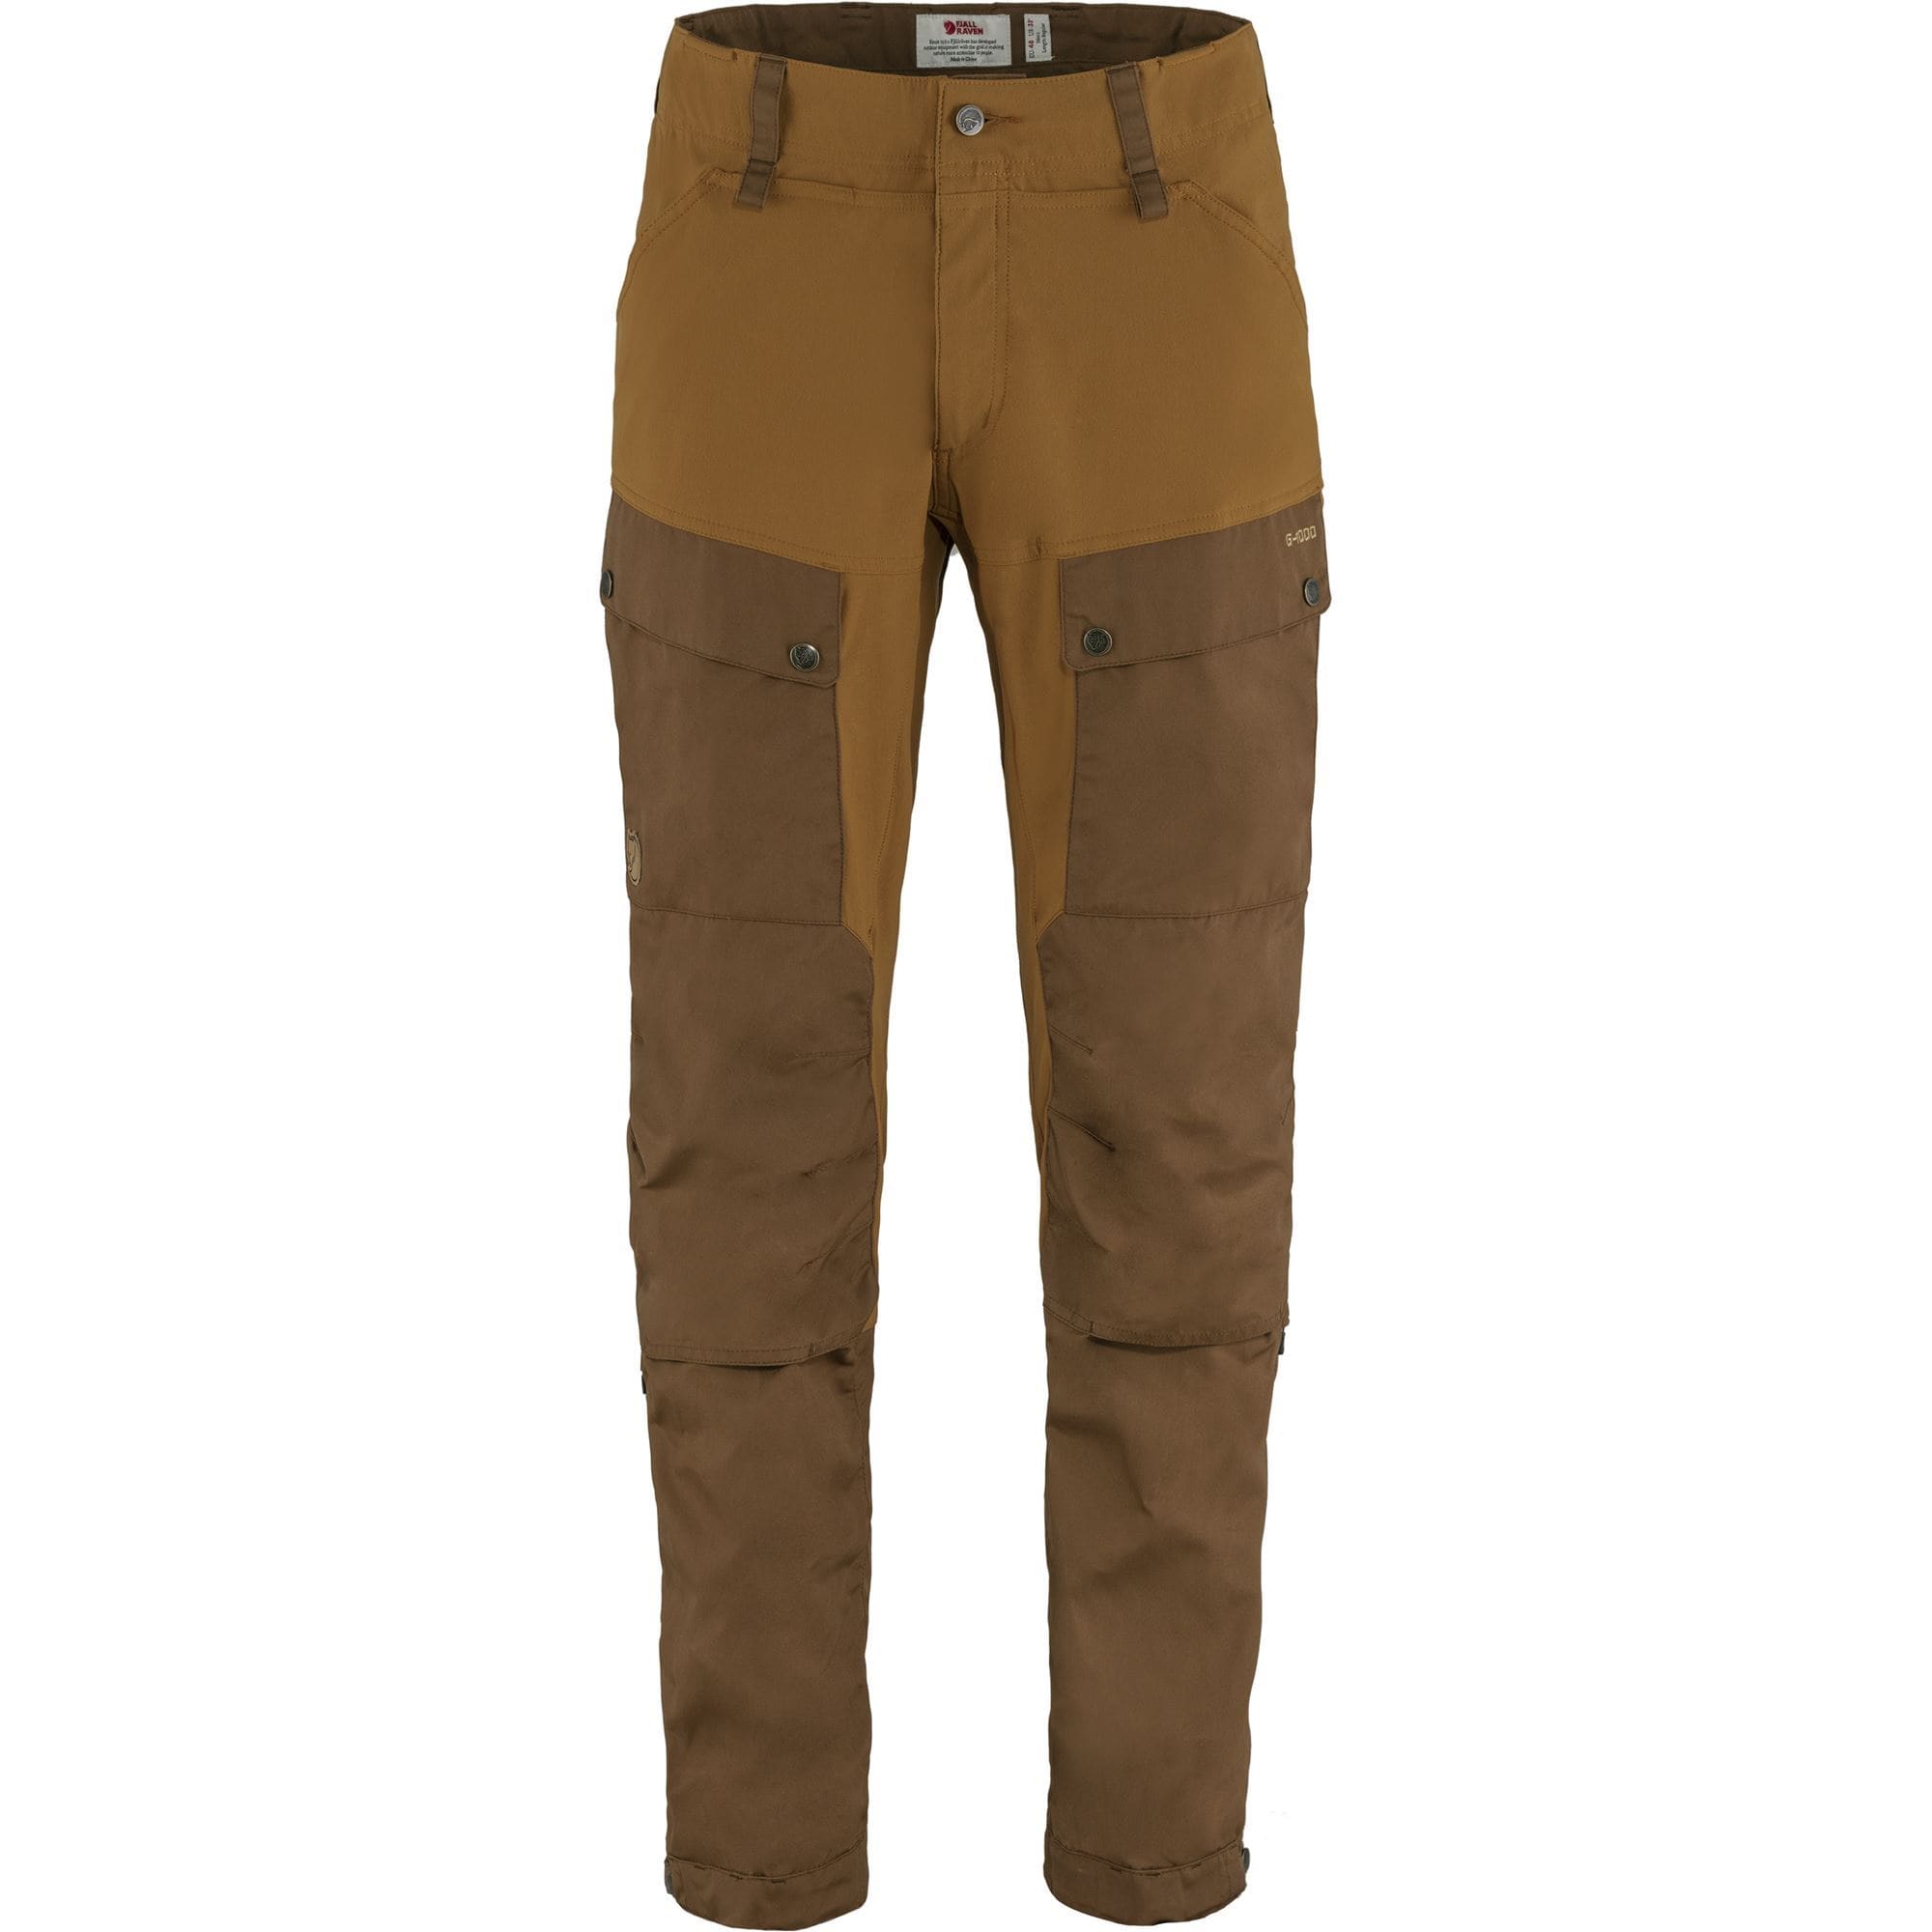 Fjällräven Trousers 48 EU / Timber Brown-Chestnut Fjällräven Keb Trousers Regular Fit M's